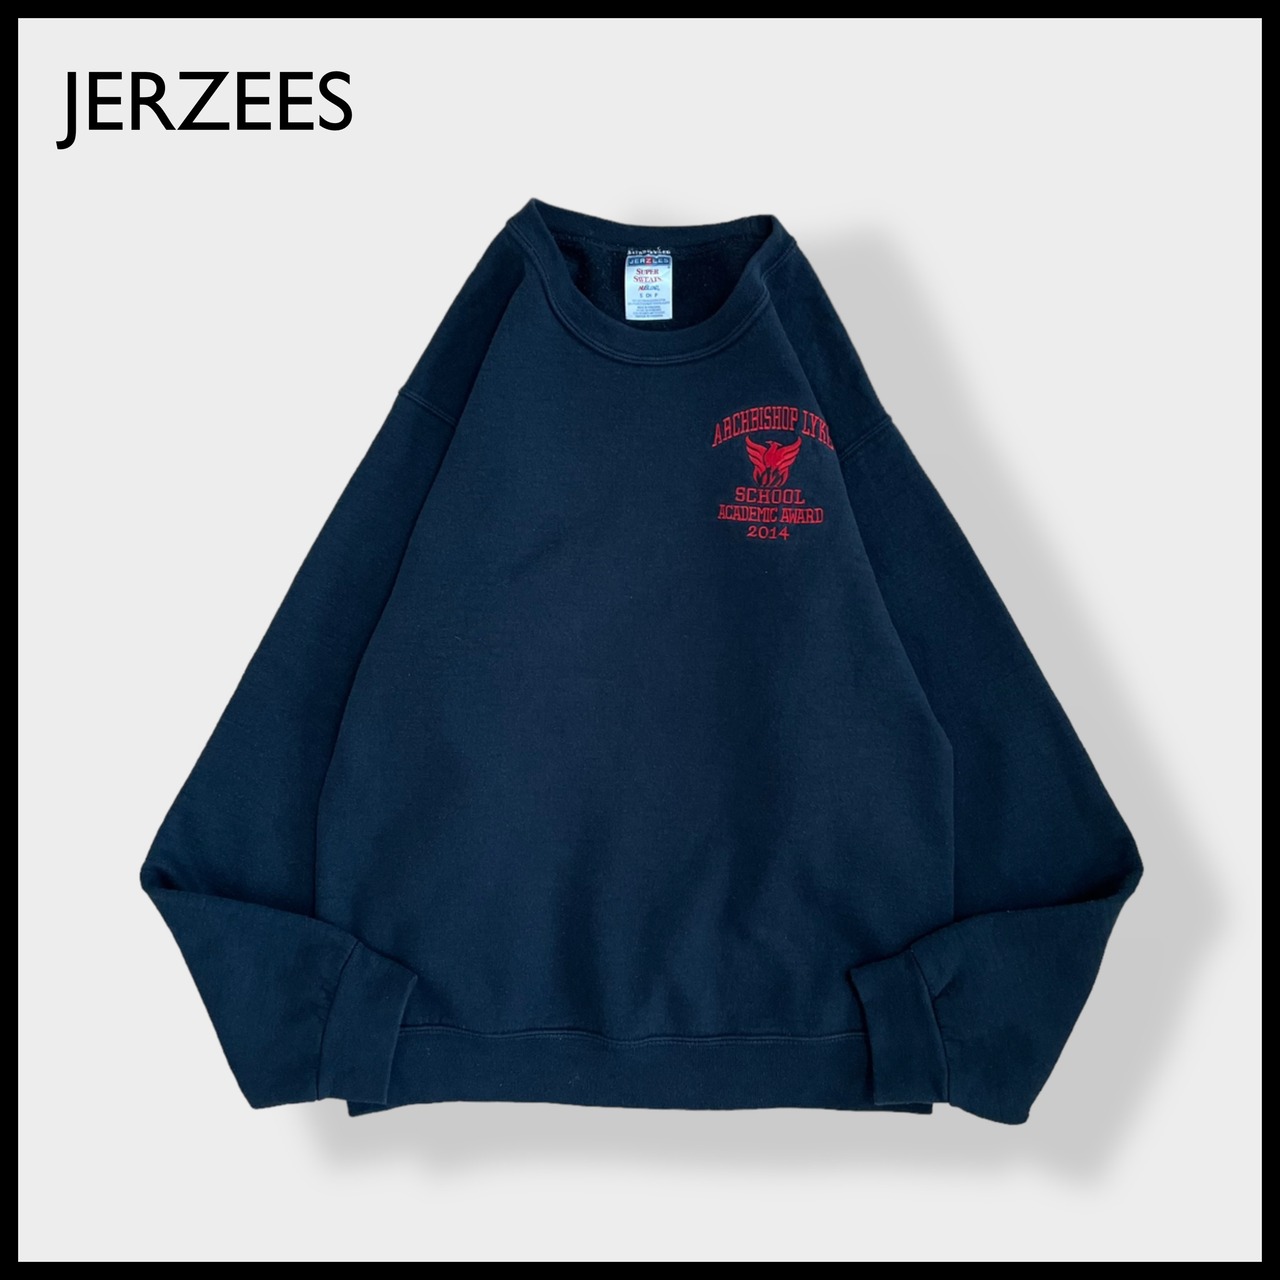 【JERZEES】スウェット ワンポイント 刺繍ロゴ ARCHBISHOP LYKE SCHOOL トレーナー プルオーバー SMALL SUPER SWEATS US古着